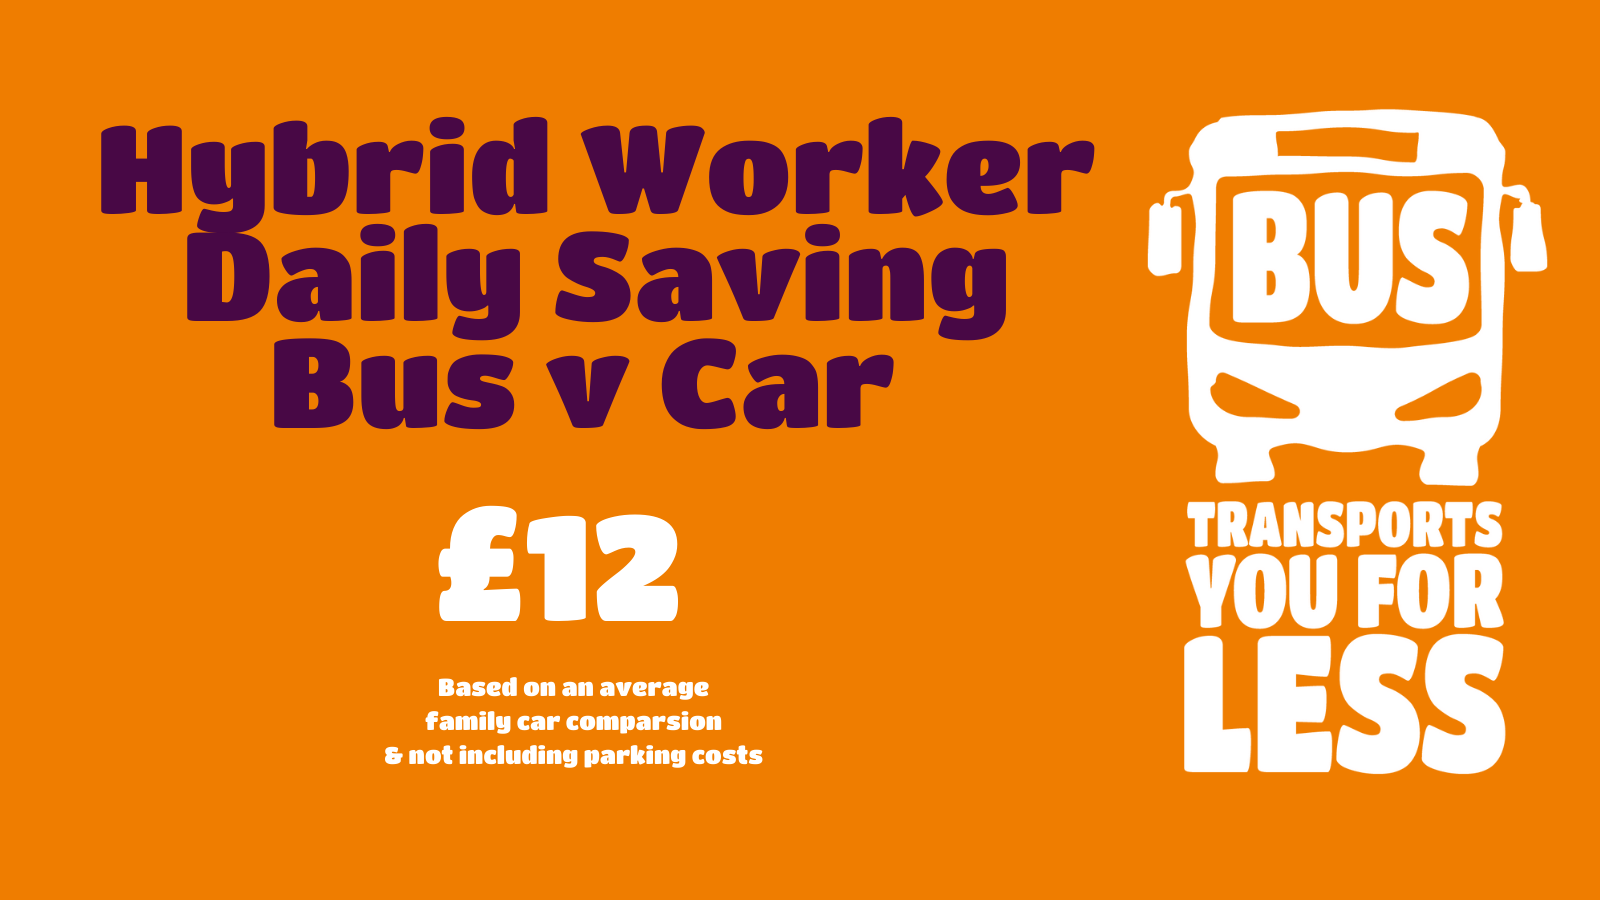 Hybrid worker annual saving Bus V Car £12